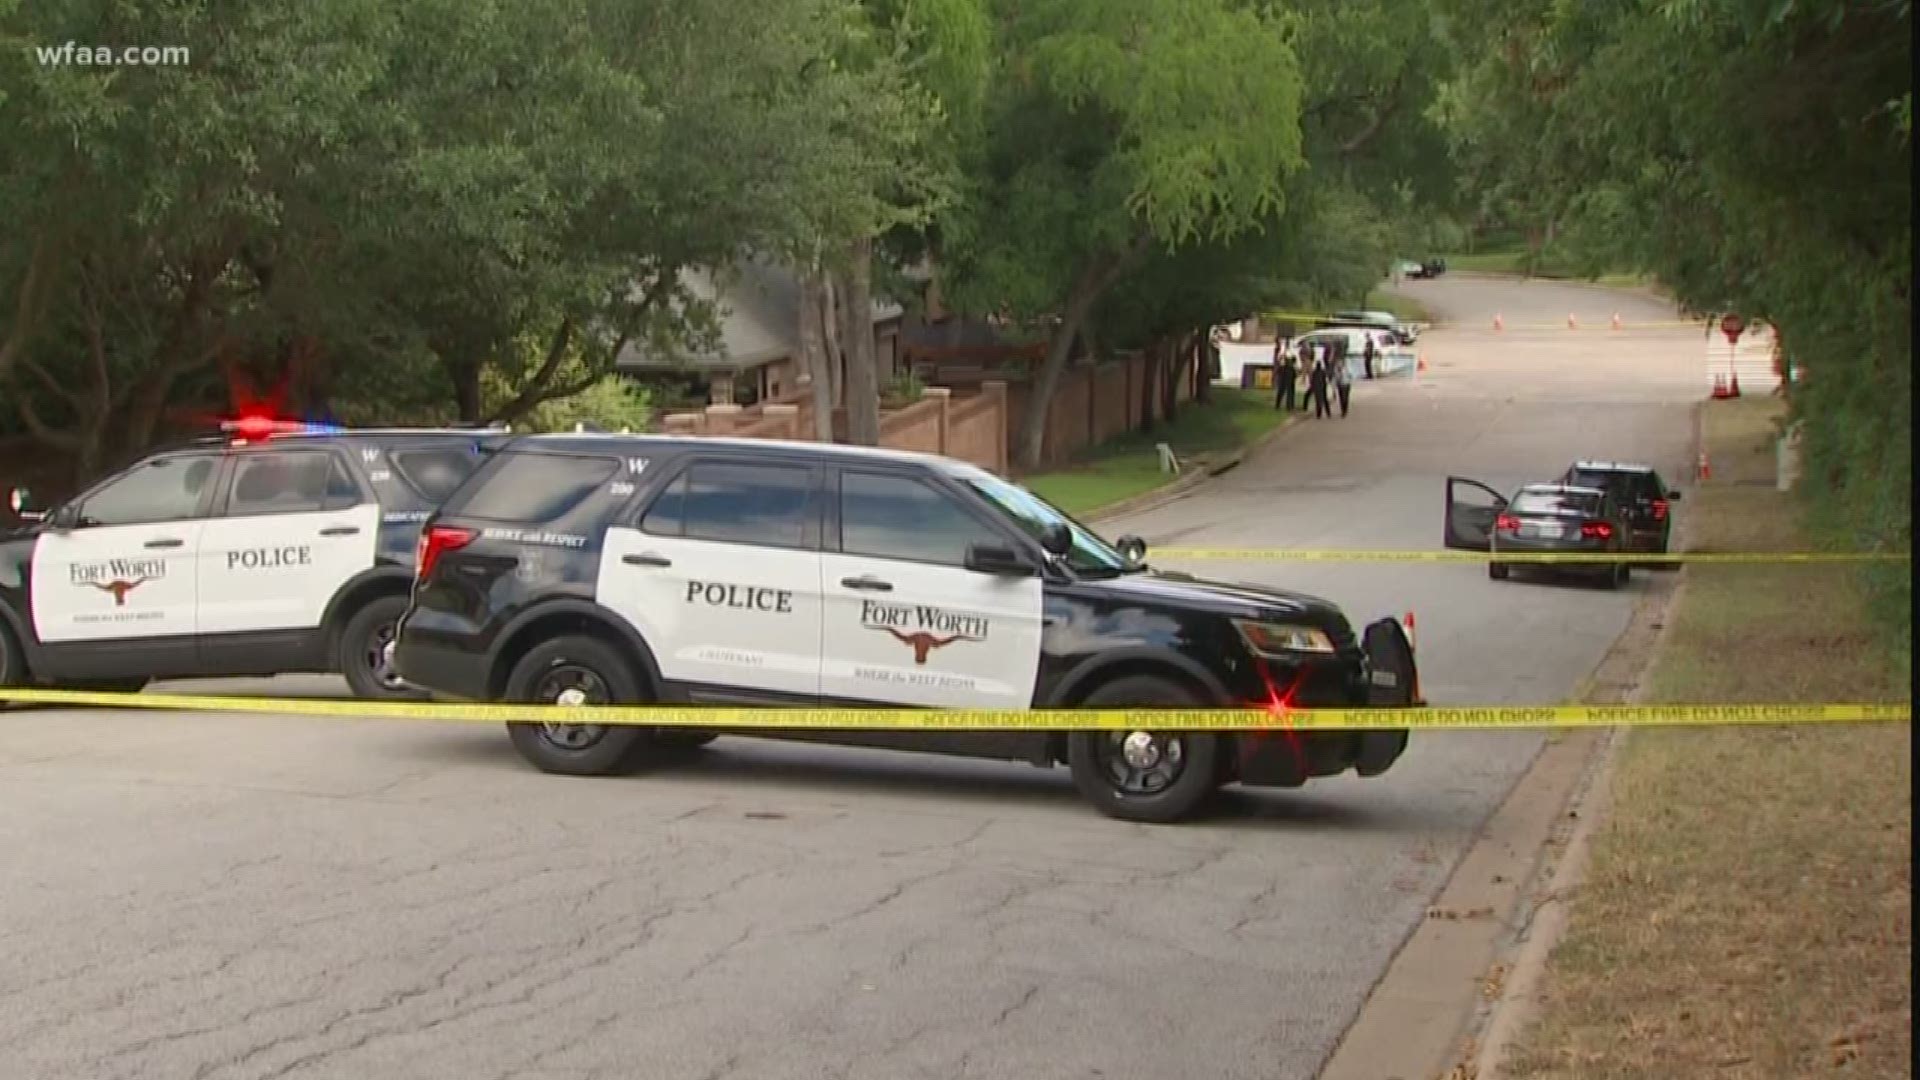 Body found in upscale Fort Worth neighborhood